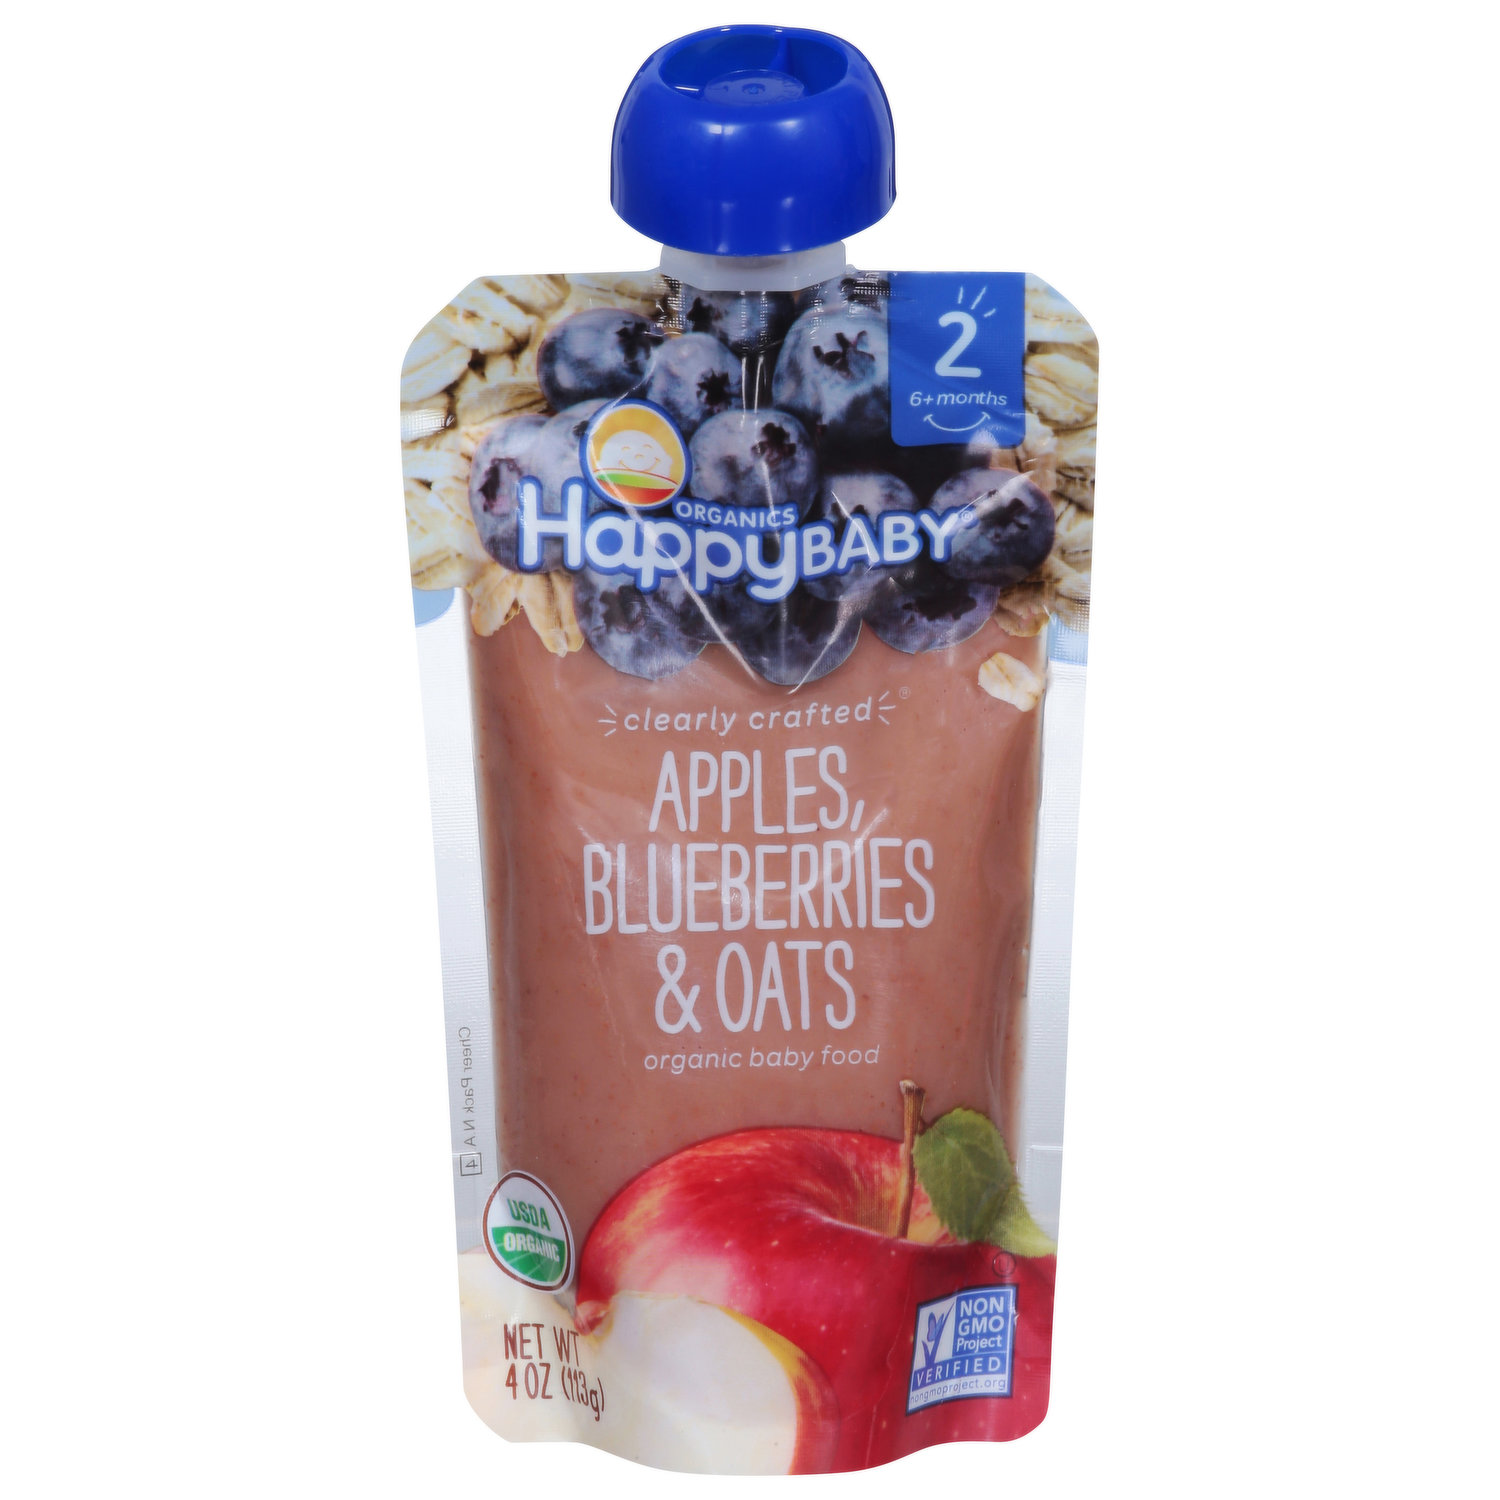 HappyBaby Baby Food, Organic, Apples, Blueberries & Oats, 2 (6+